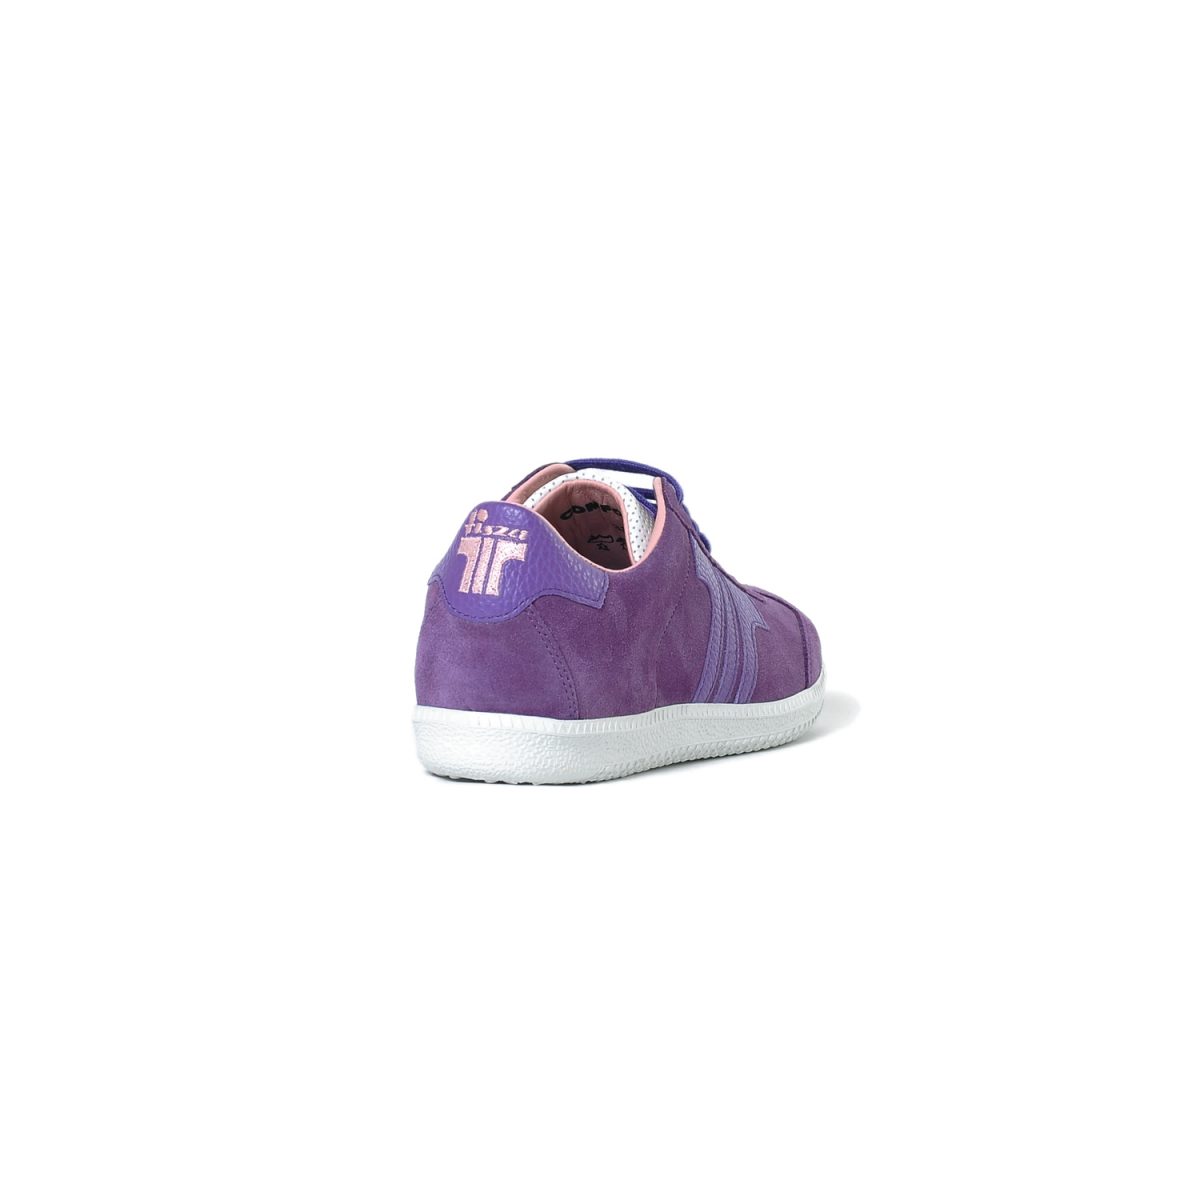 Tisza shoes - Comfort - Purple